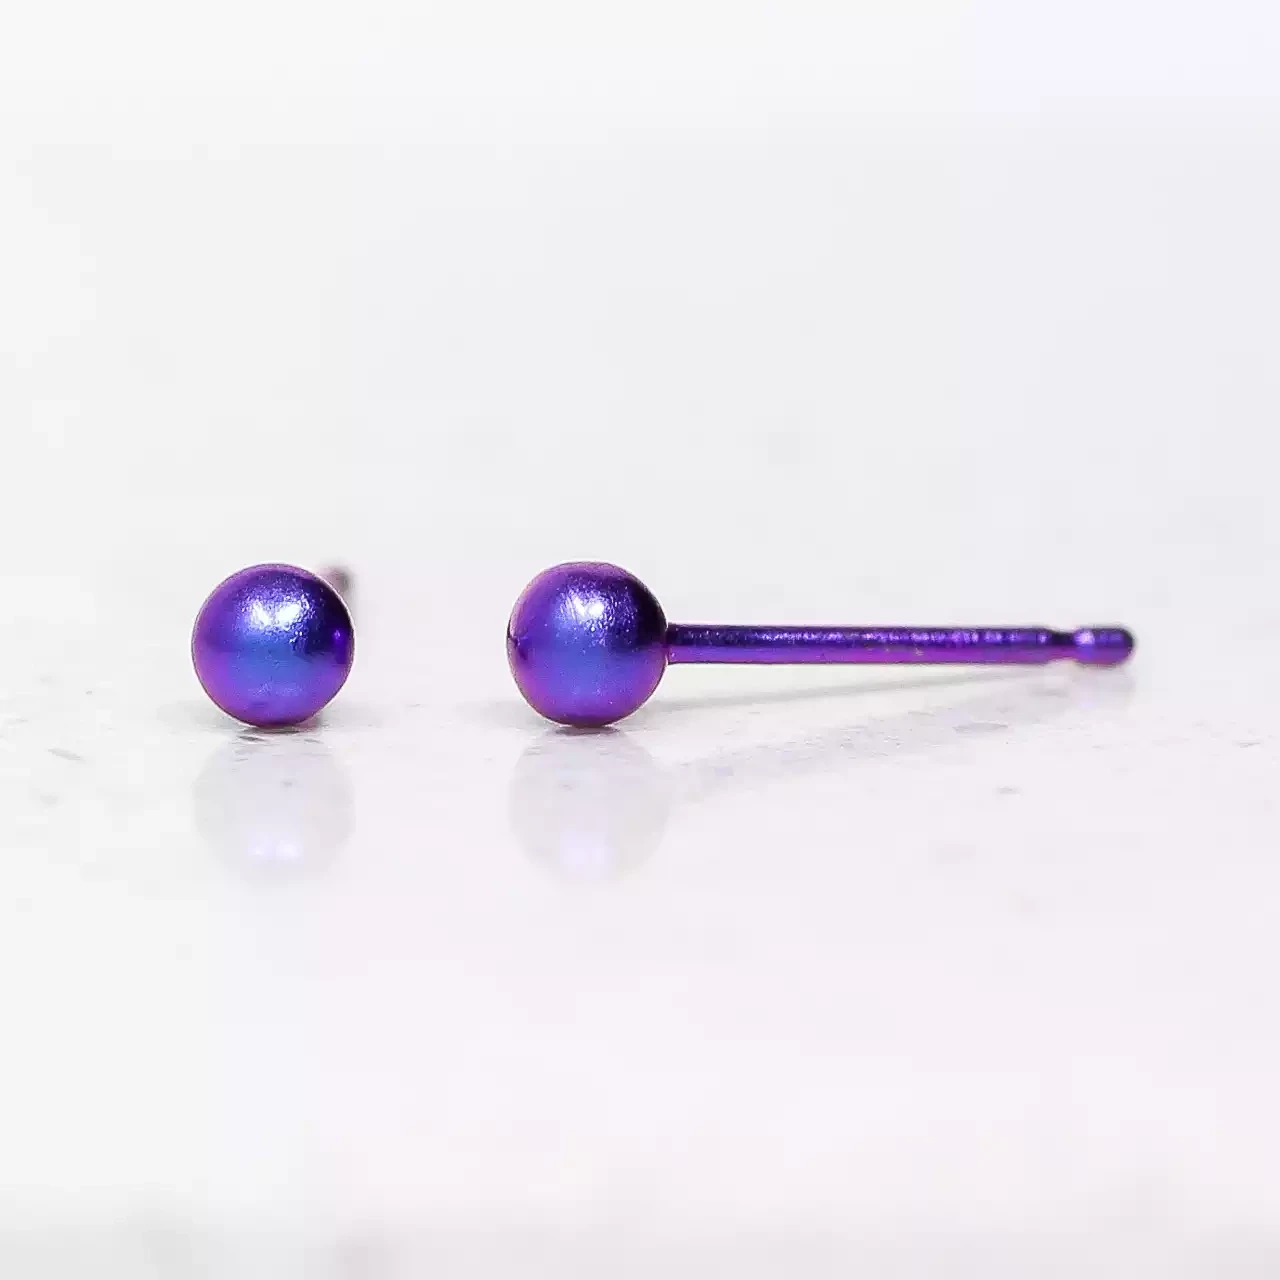 Titanium Round Bead Studs - Small - Purple by Prism Design